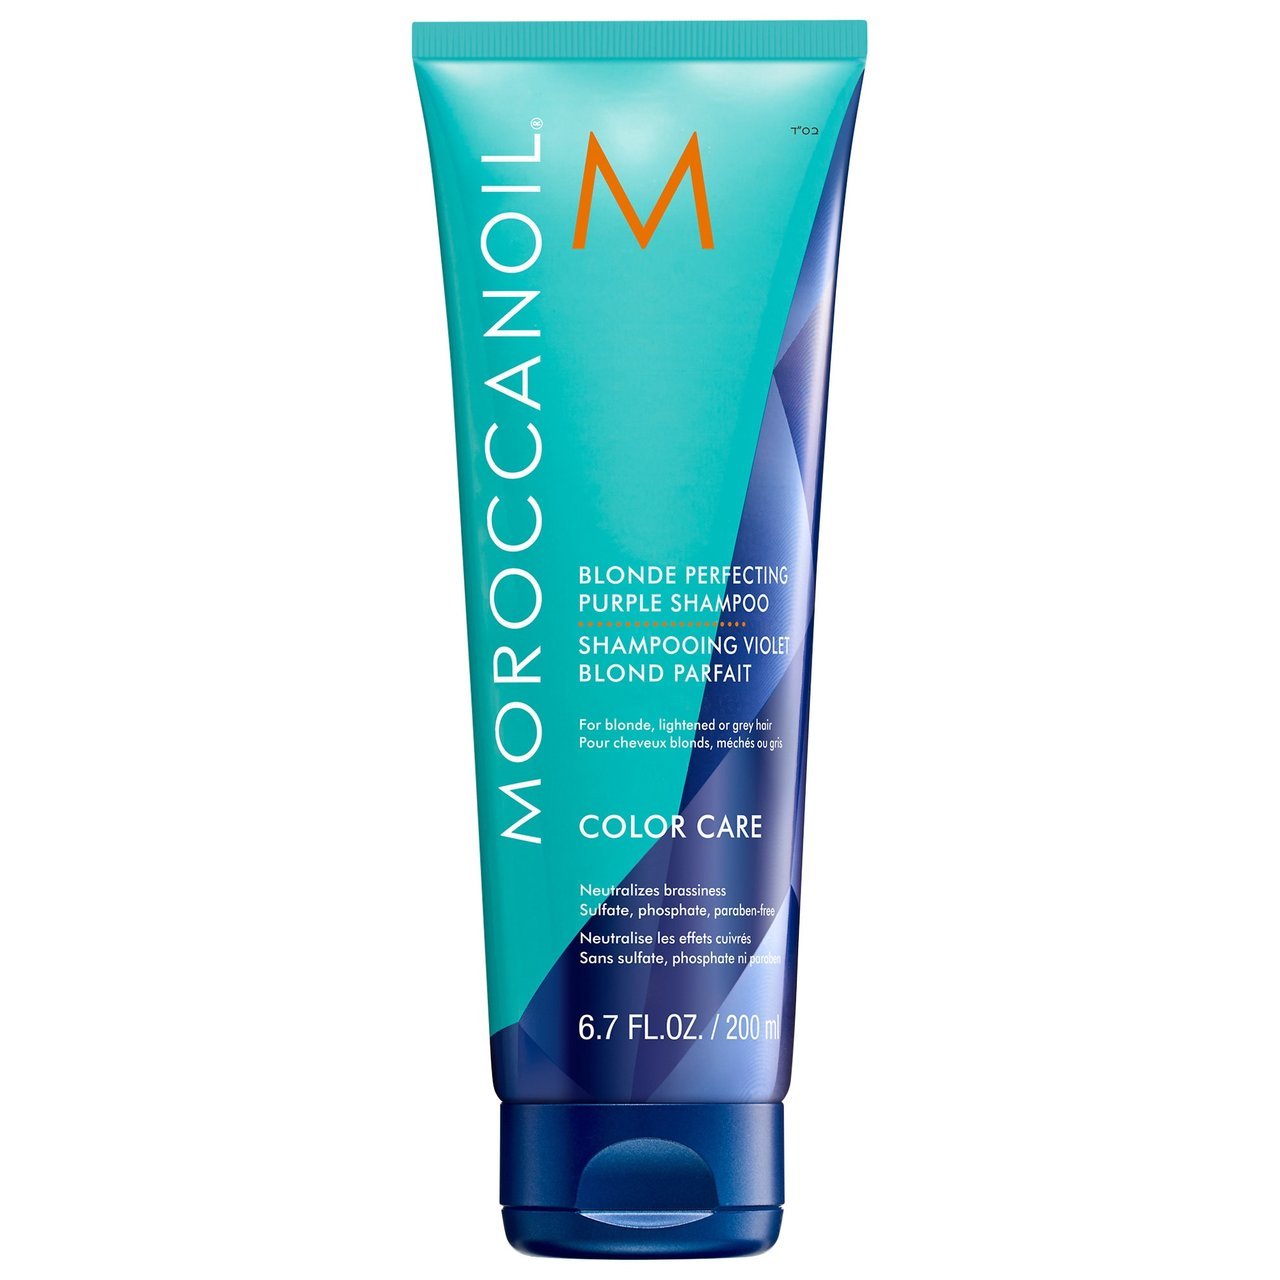 MoroccanOil Blonde Perfecting Purple Shampoo 6.7oz